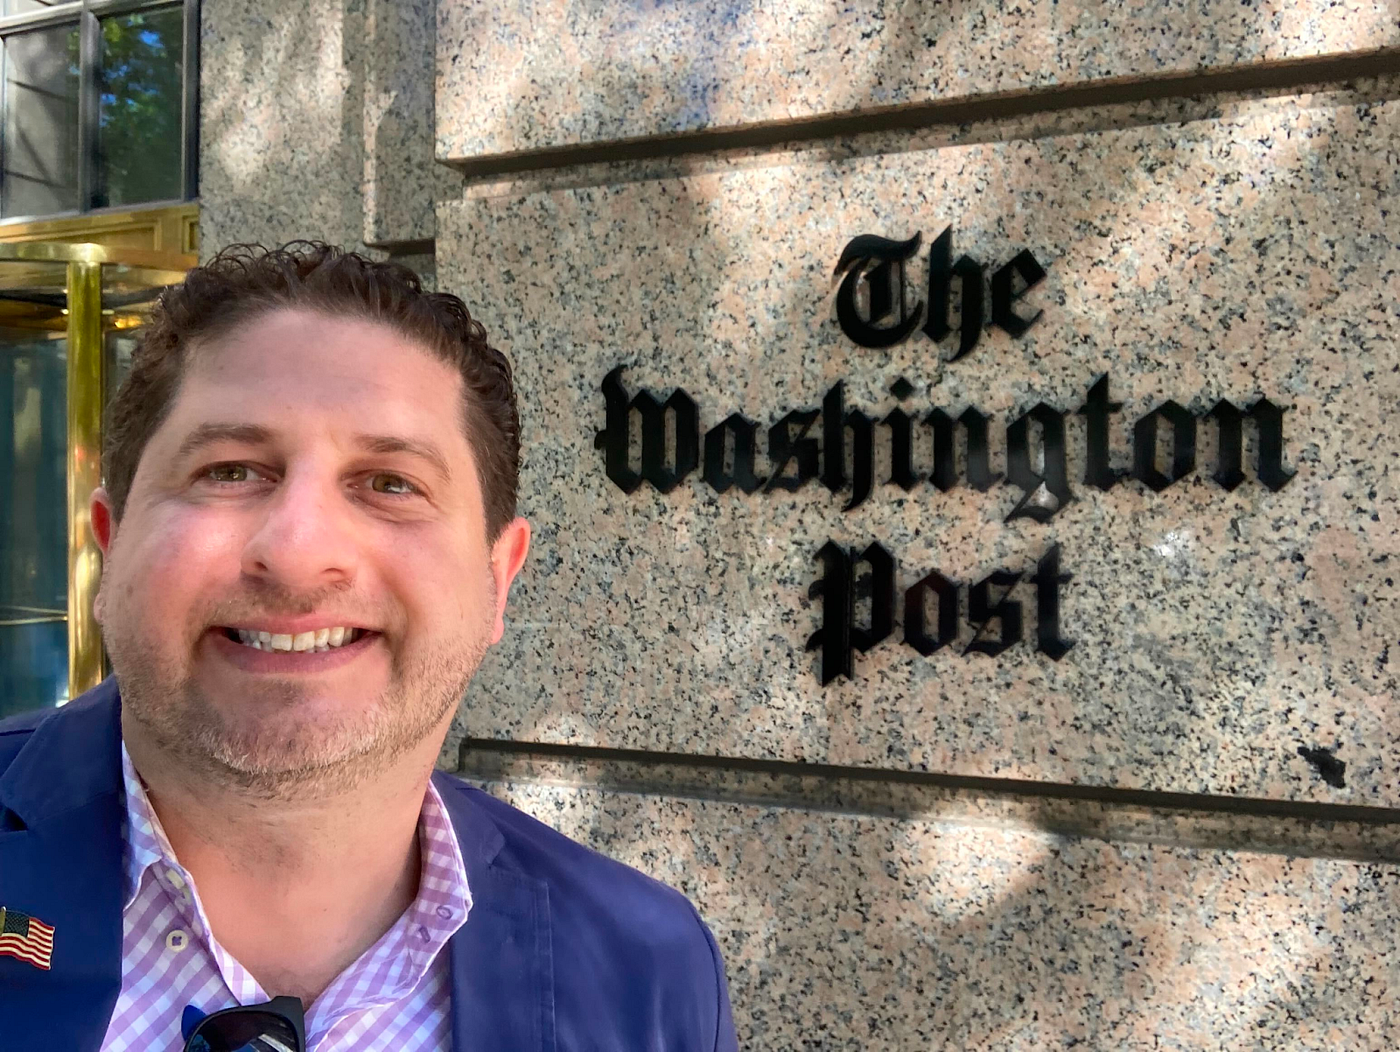 Offering-Washington-Post's